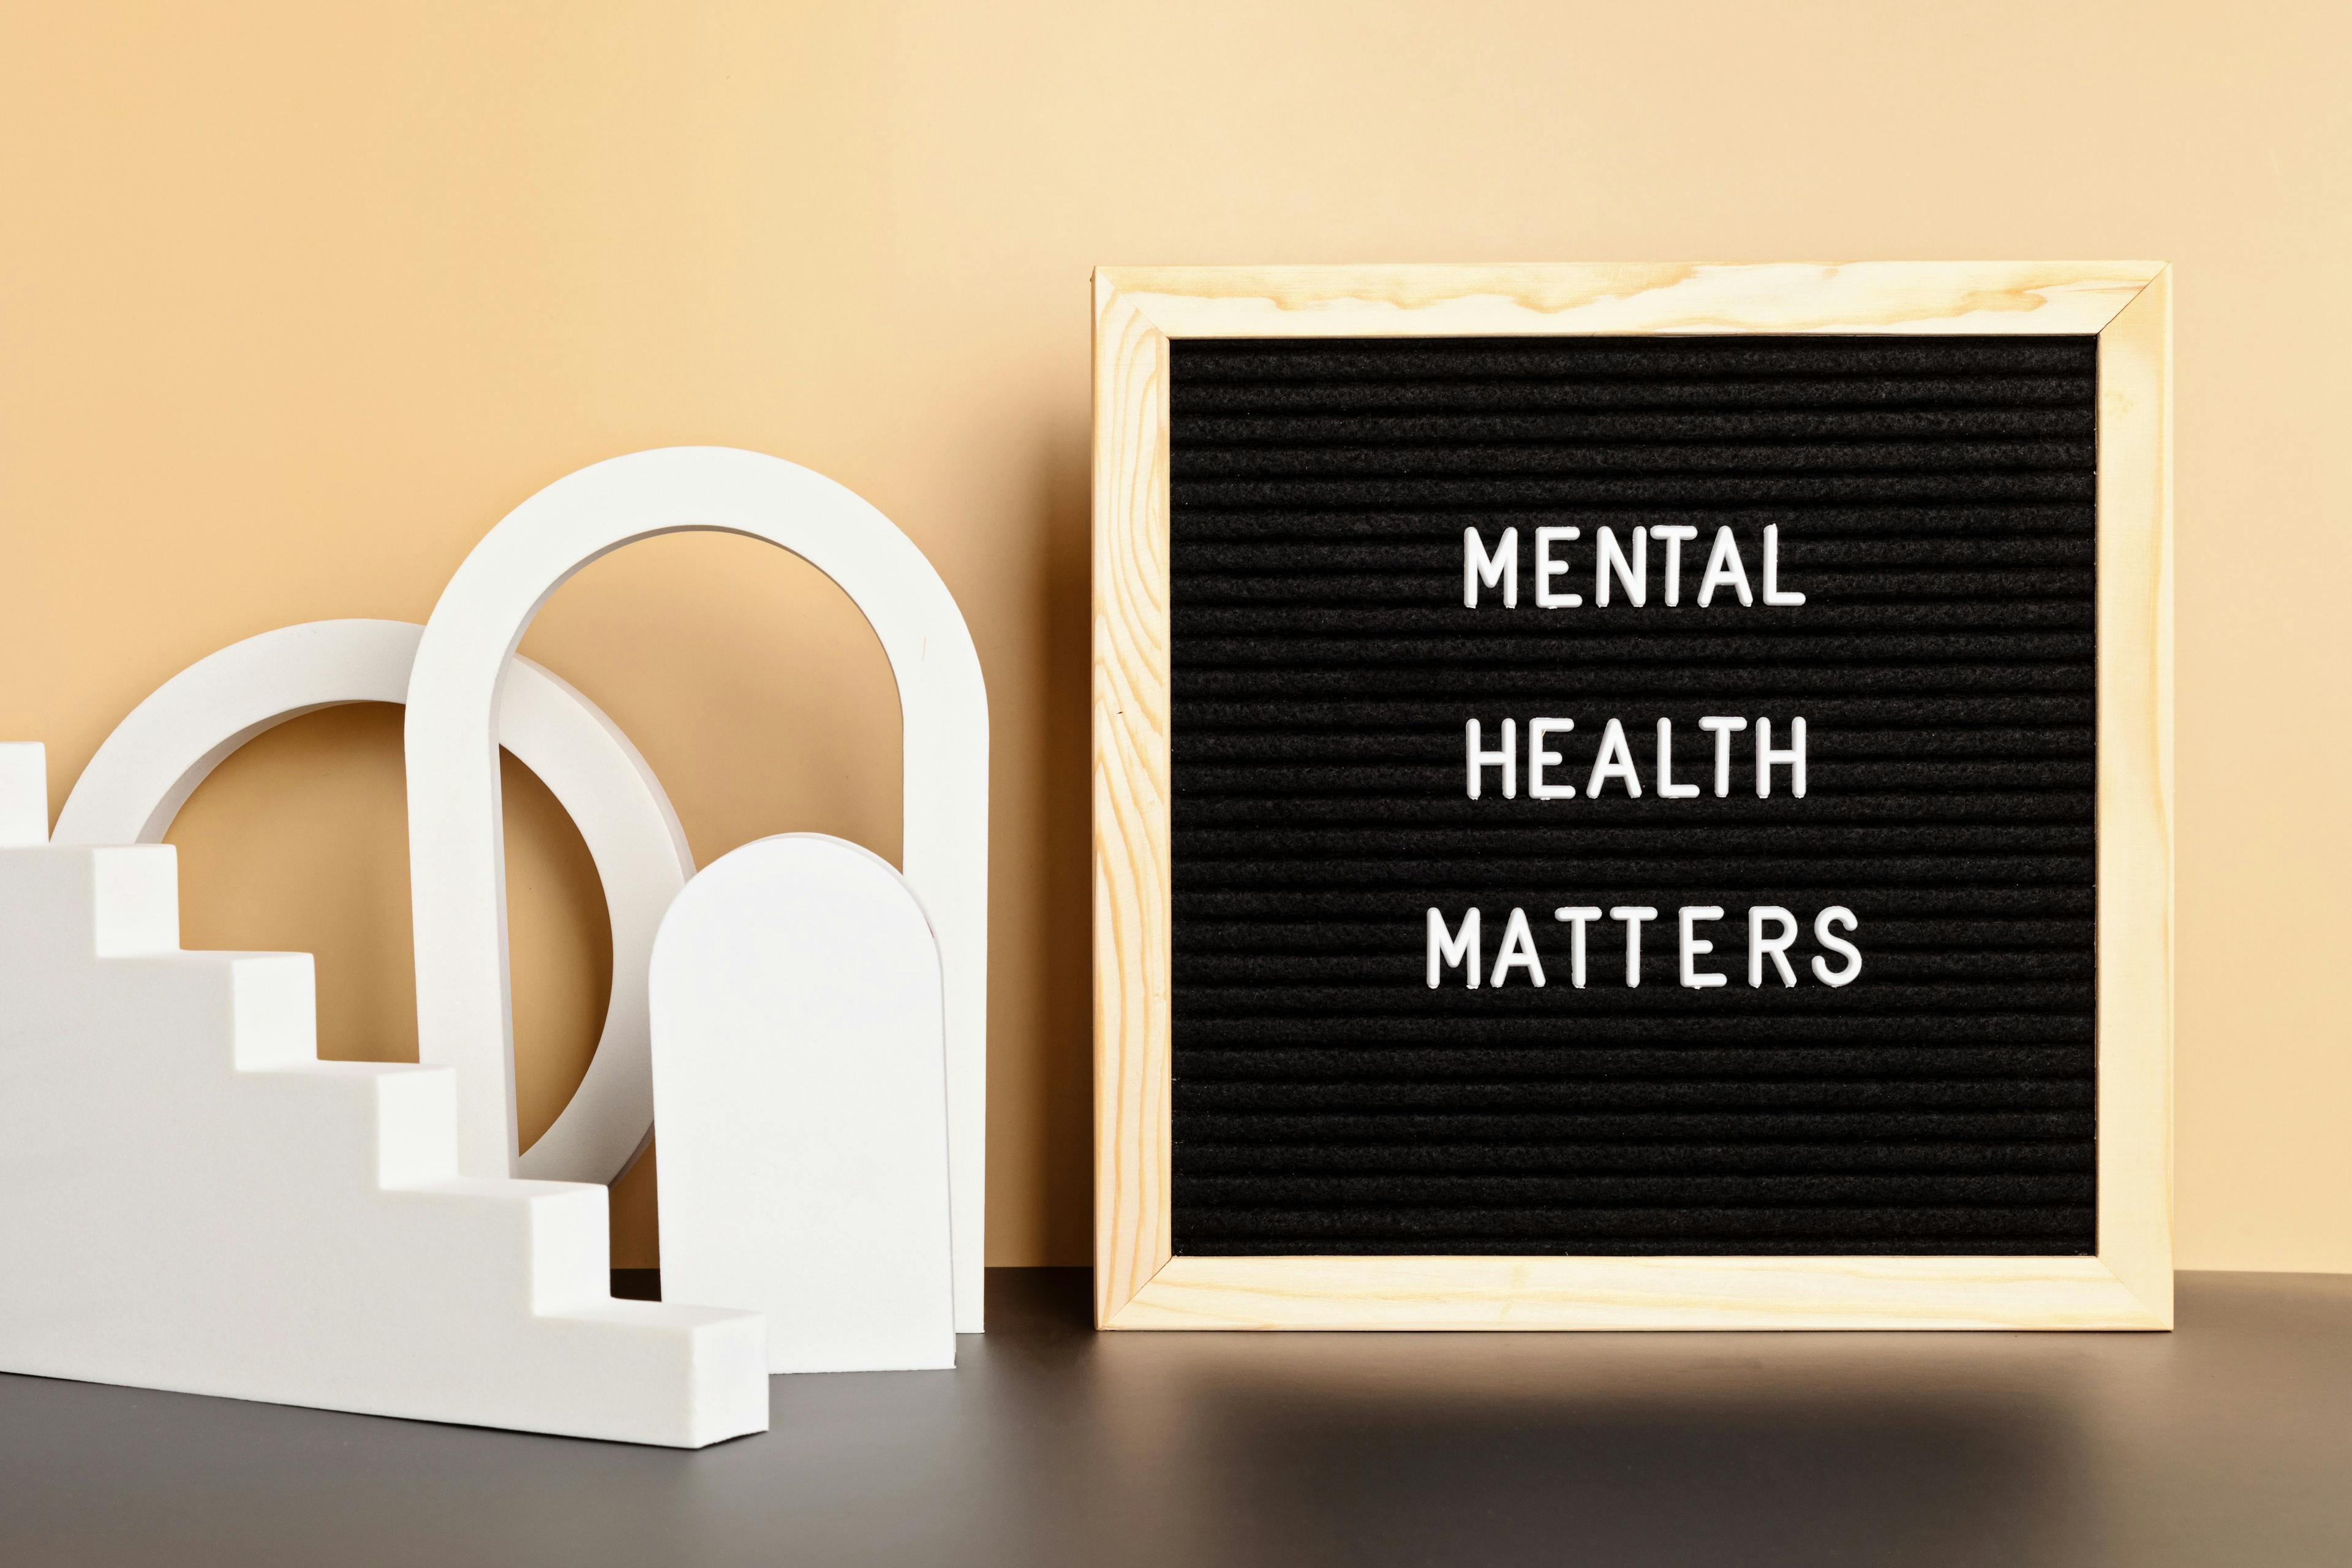 Mental health matters | Image credit: netrun78 - stock.adobe.com